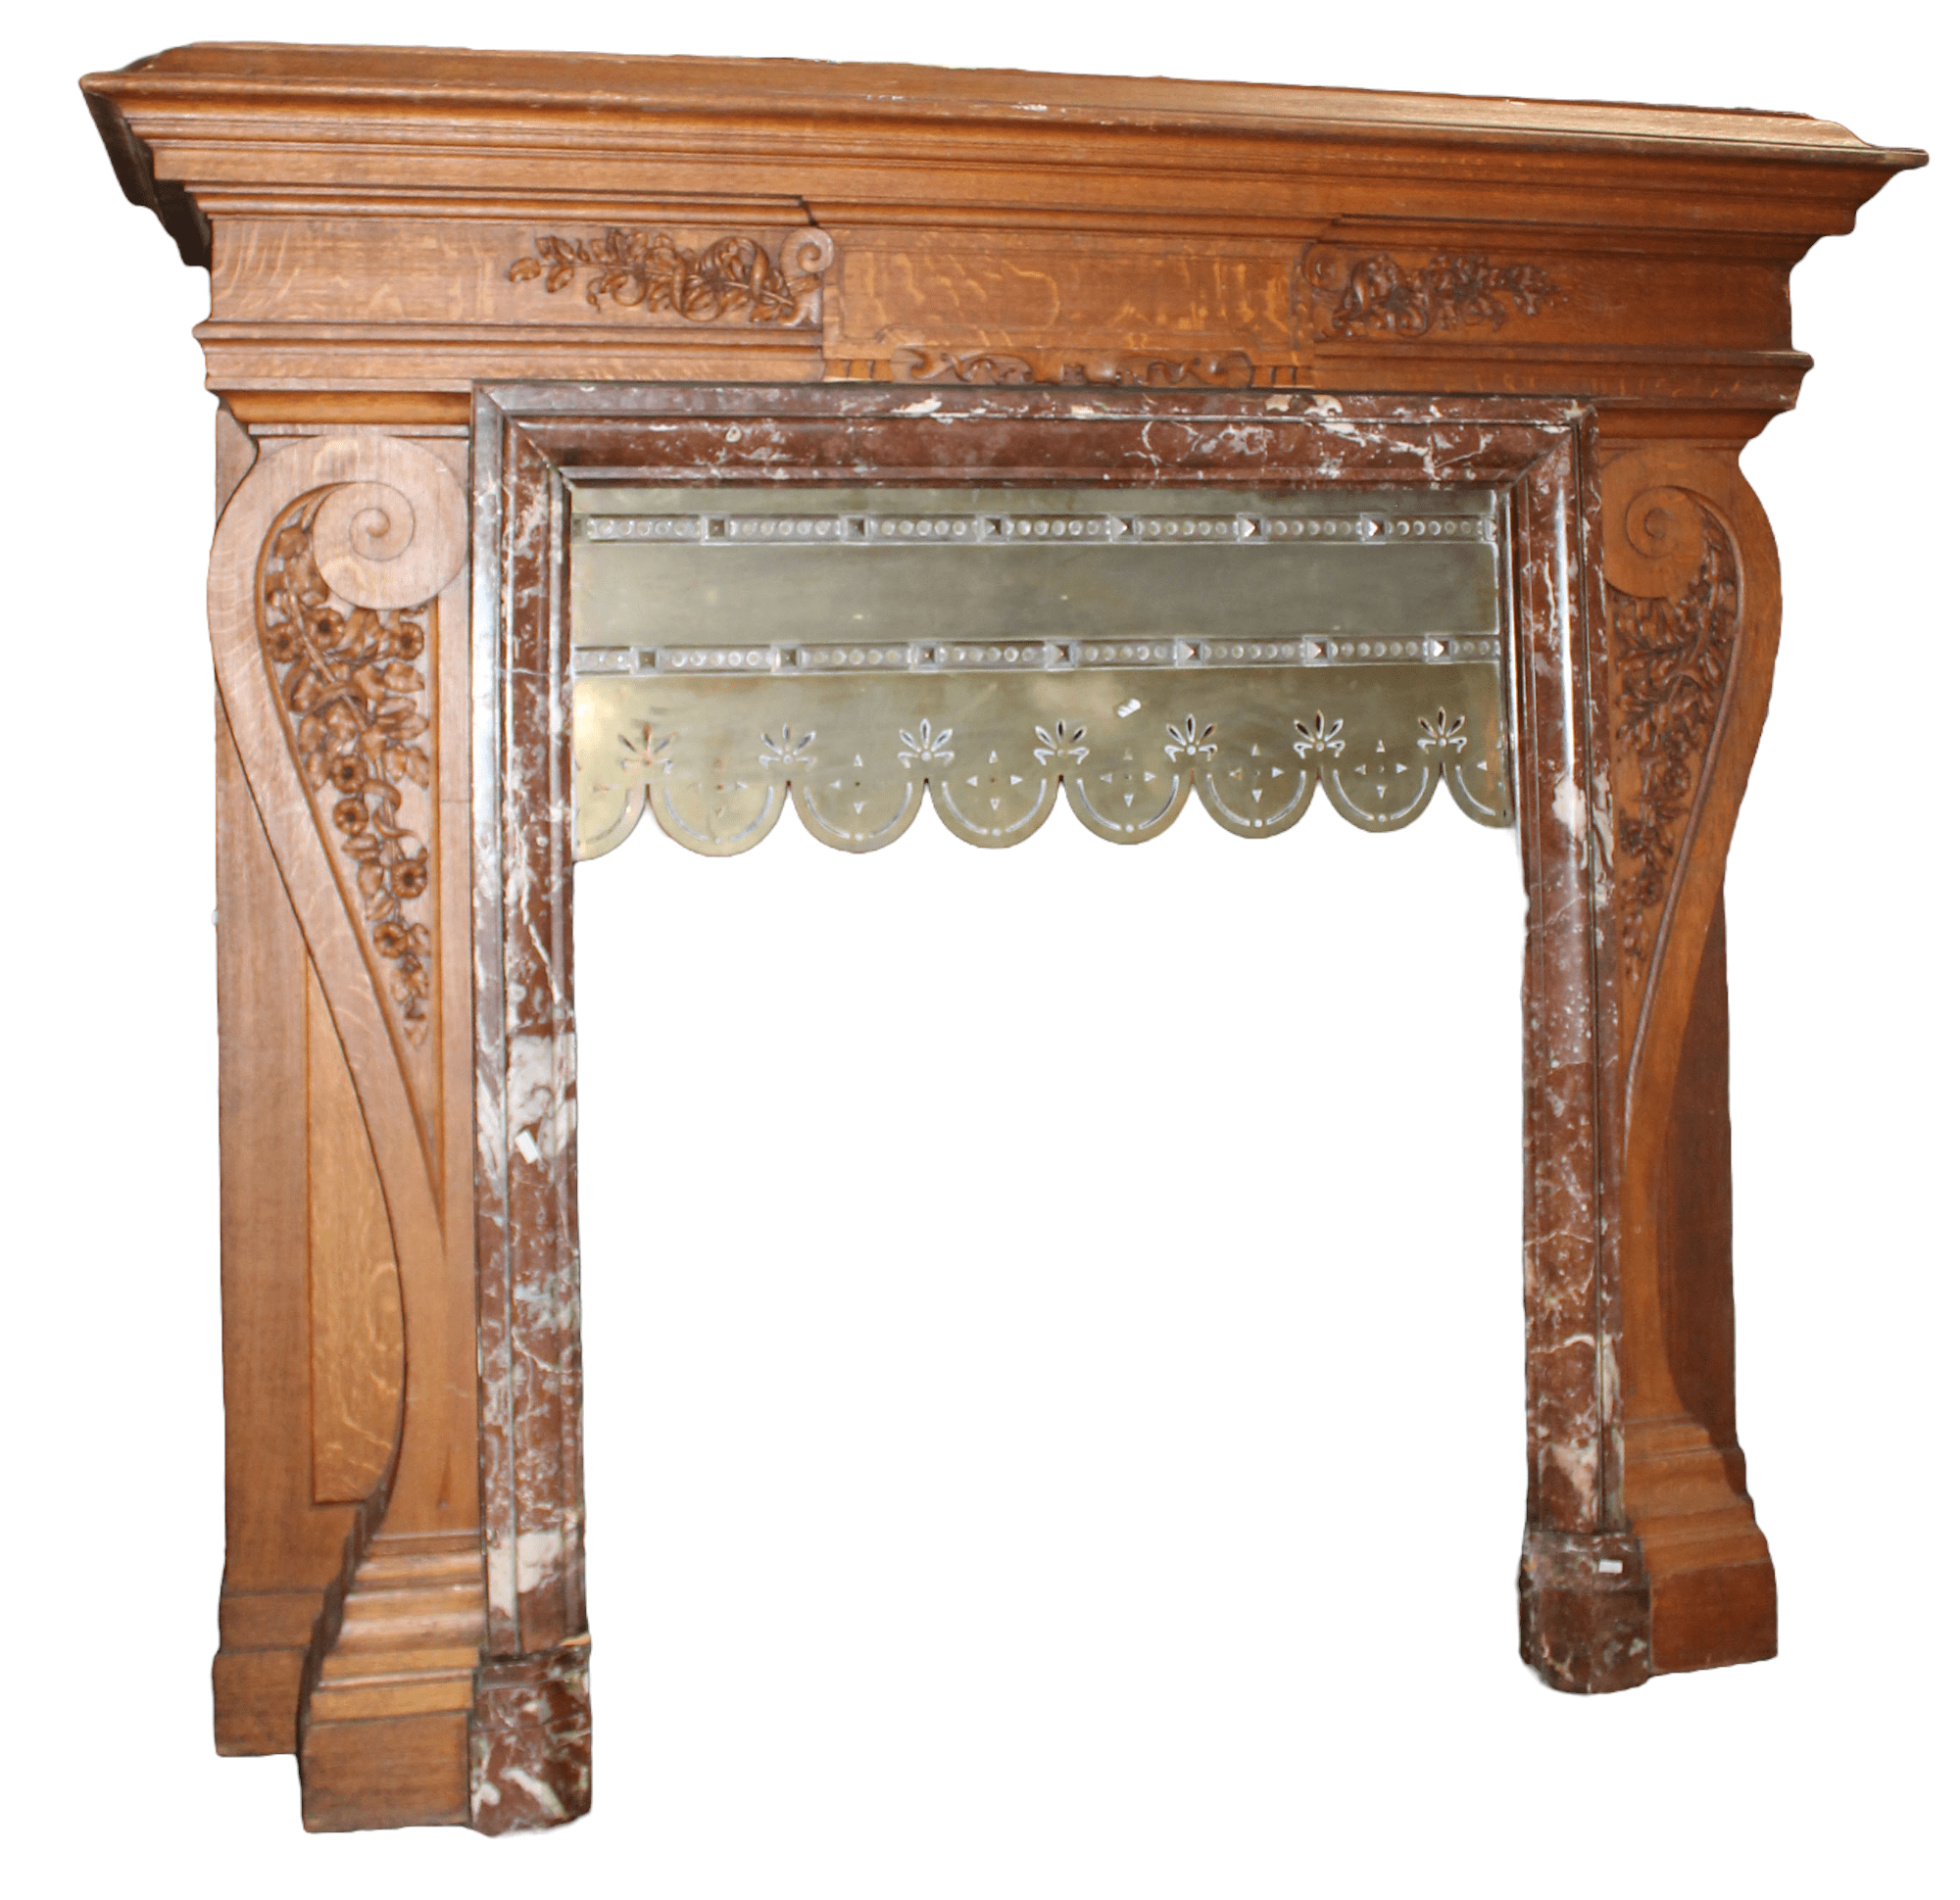 Grand French Renaissance fireplace mantel in oak